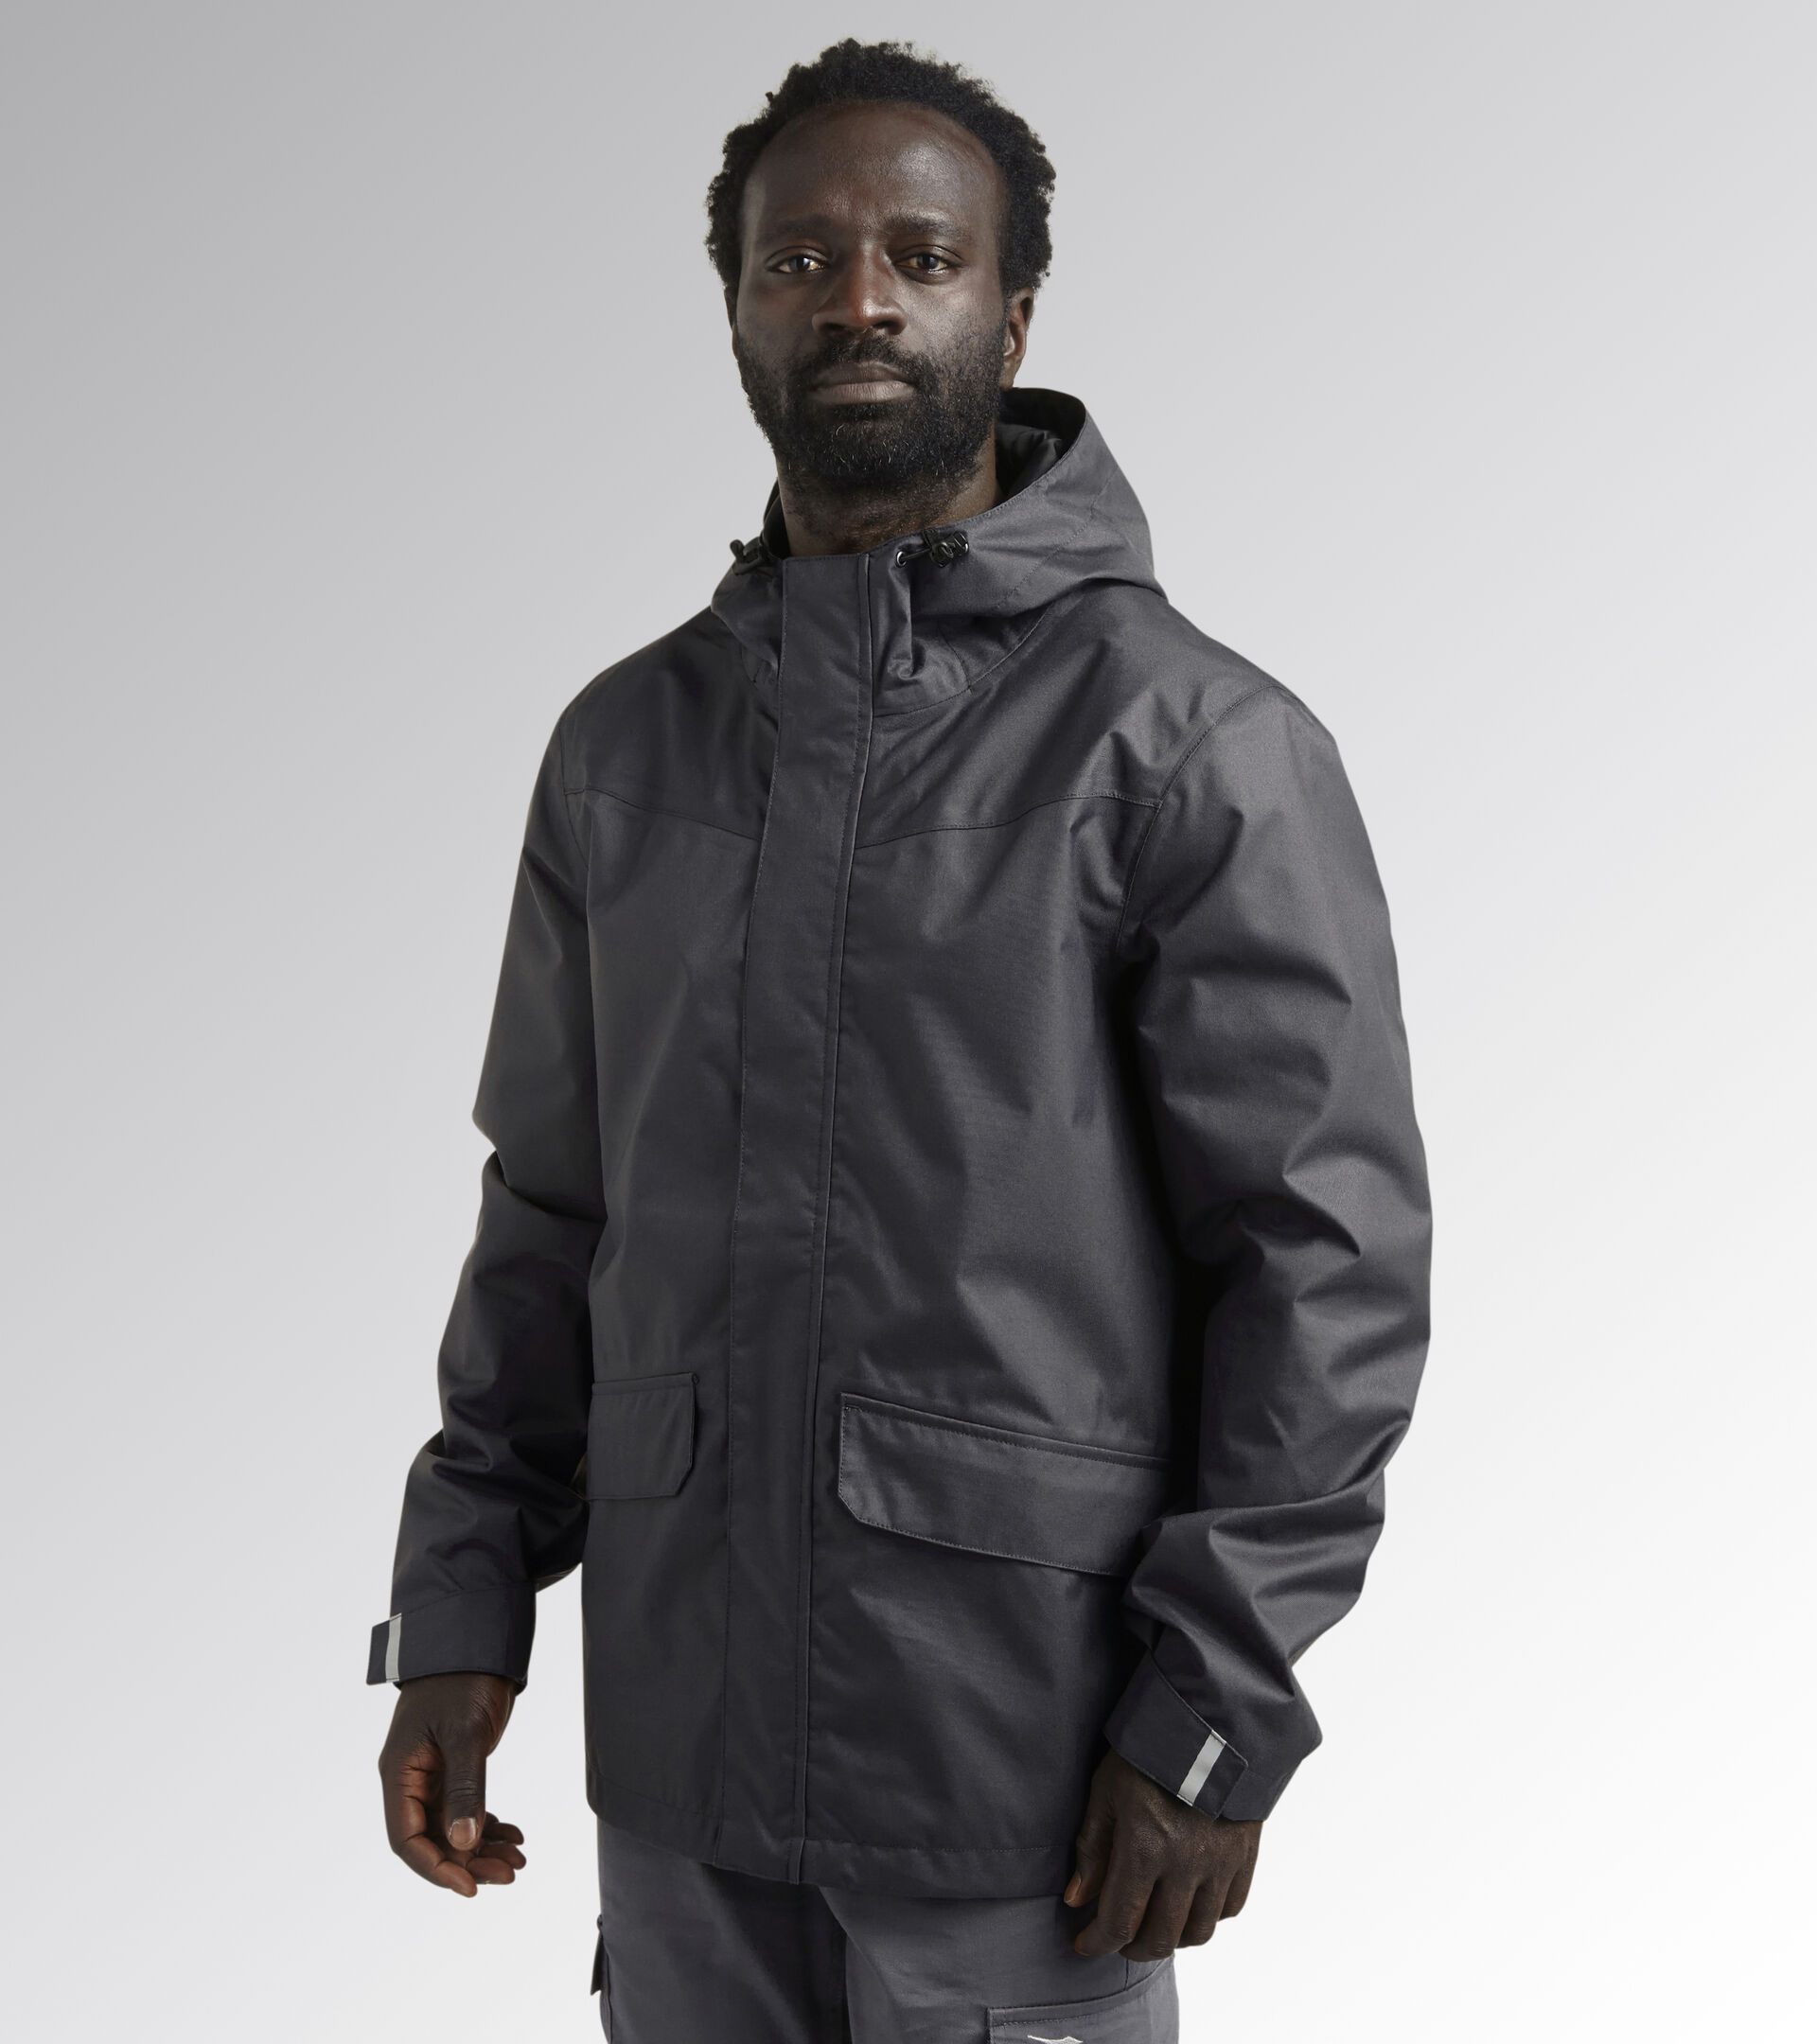 Work jacket RAIN JKT LITEWORK EN 343 BLACK COAL - Utility